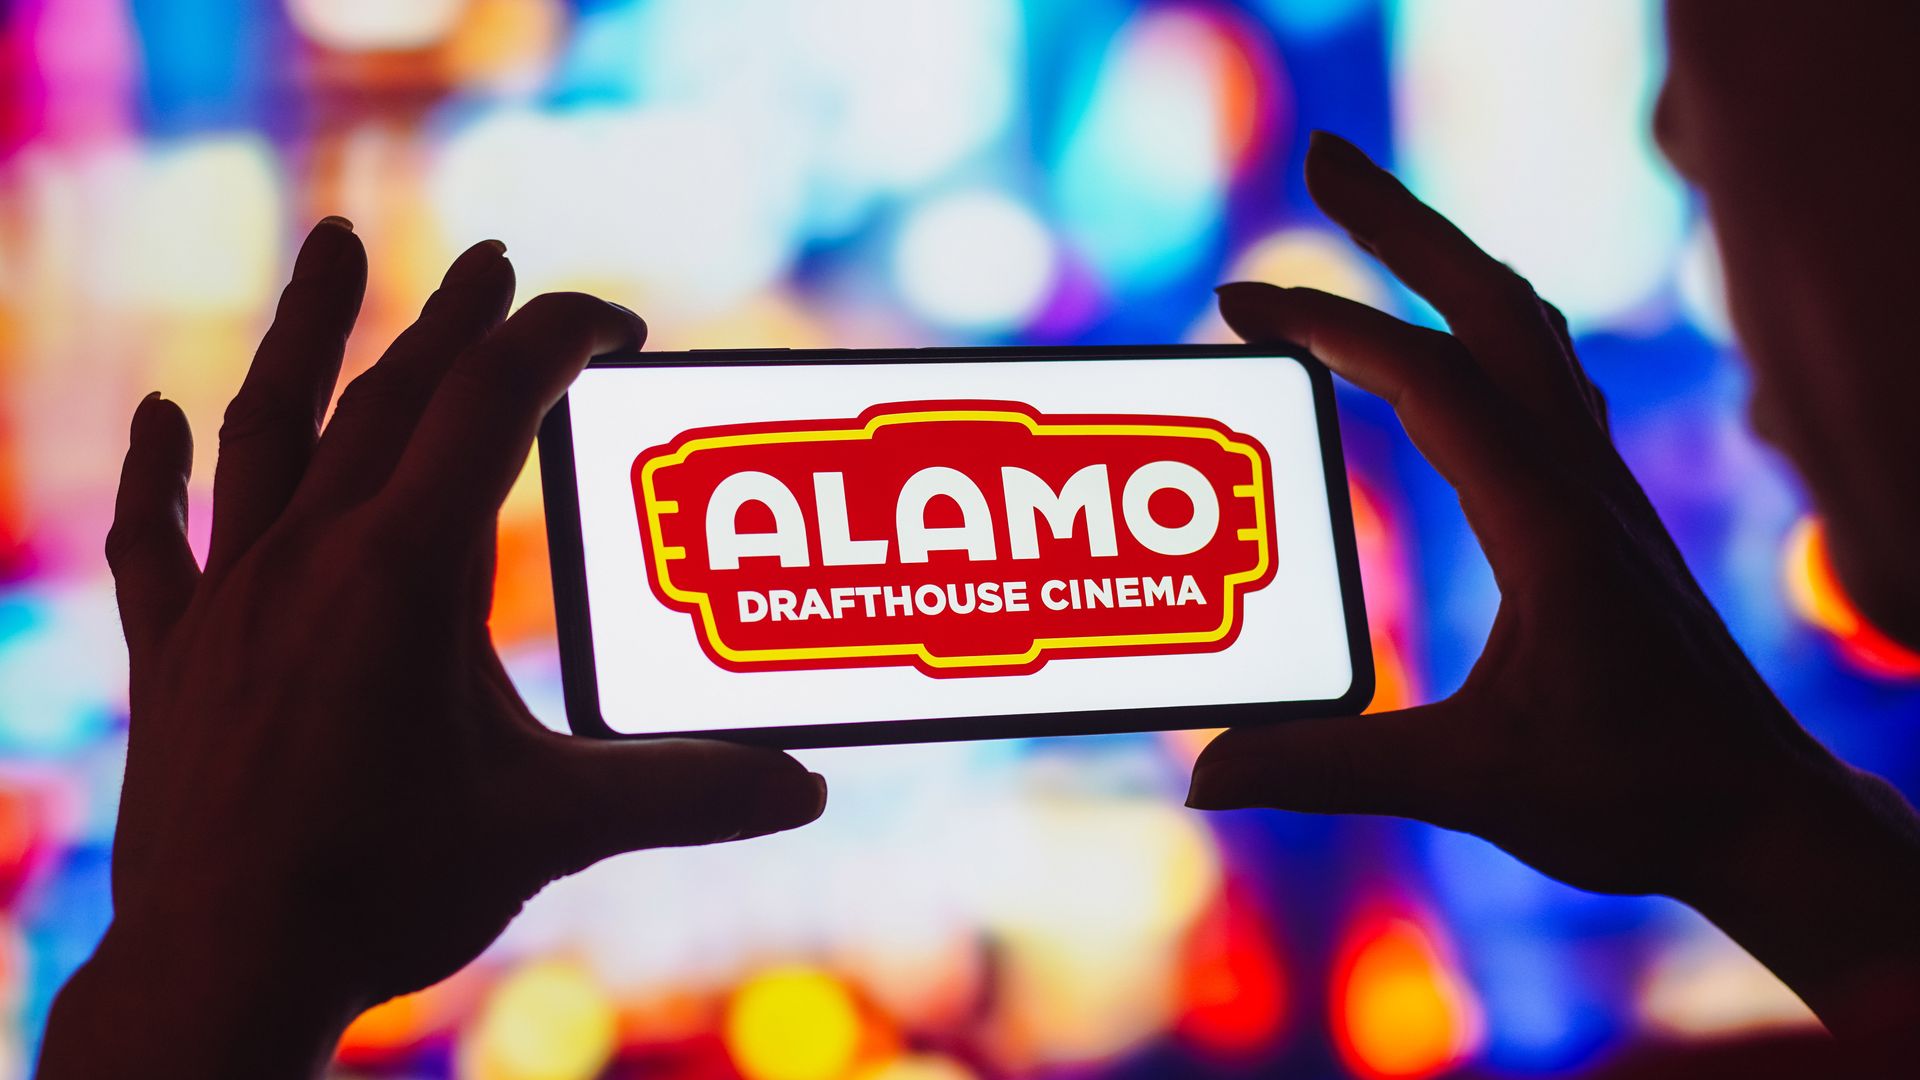 Alamo Drafthouse Cinema logo on smartphone